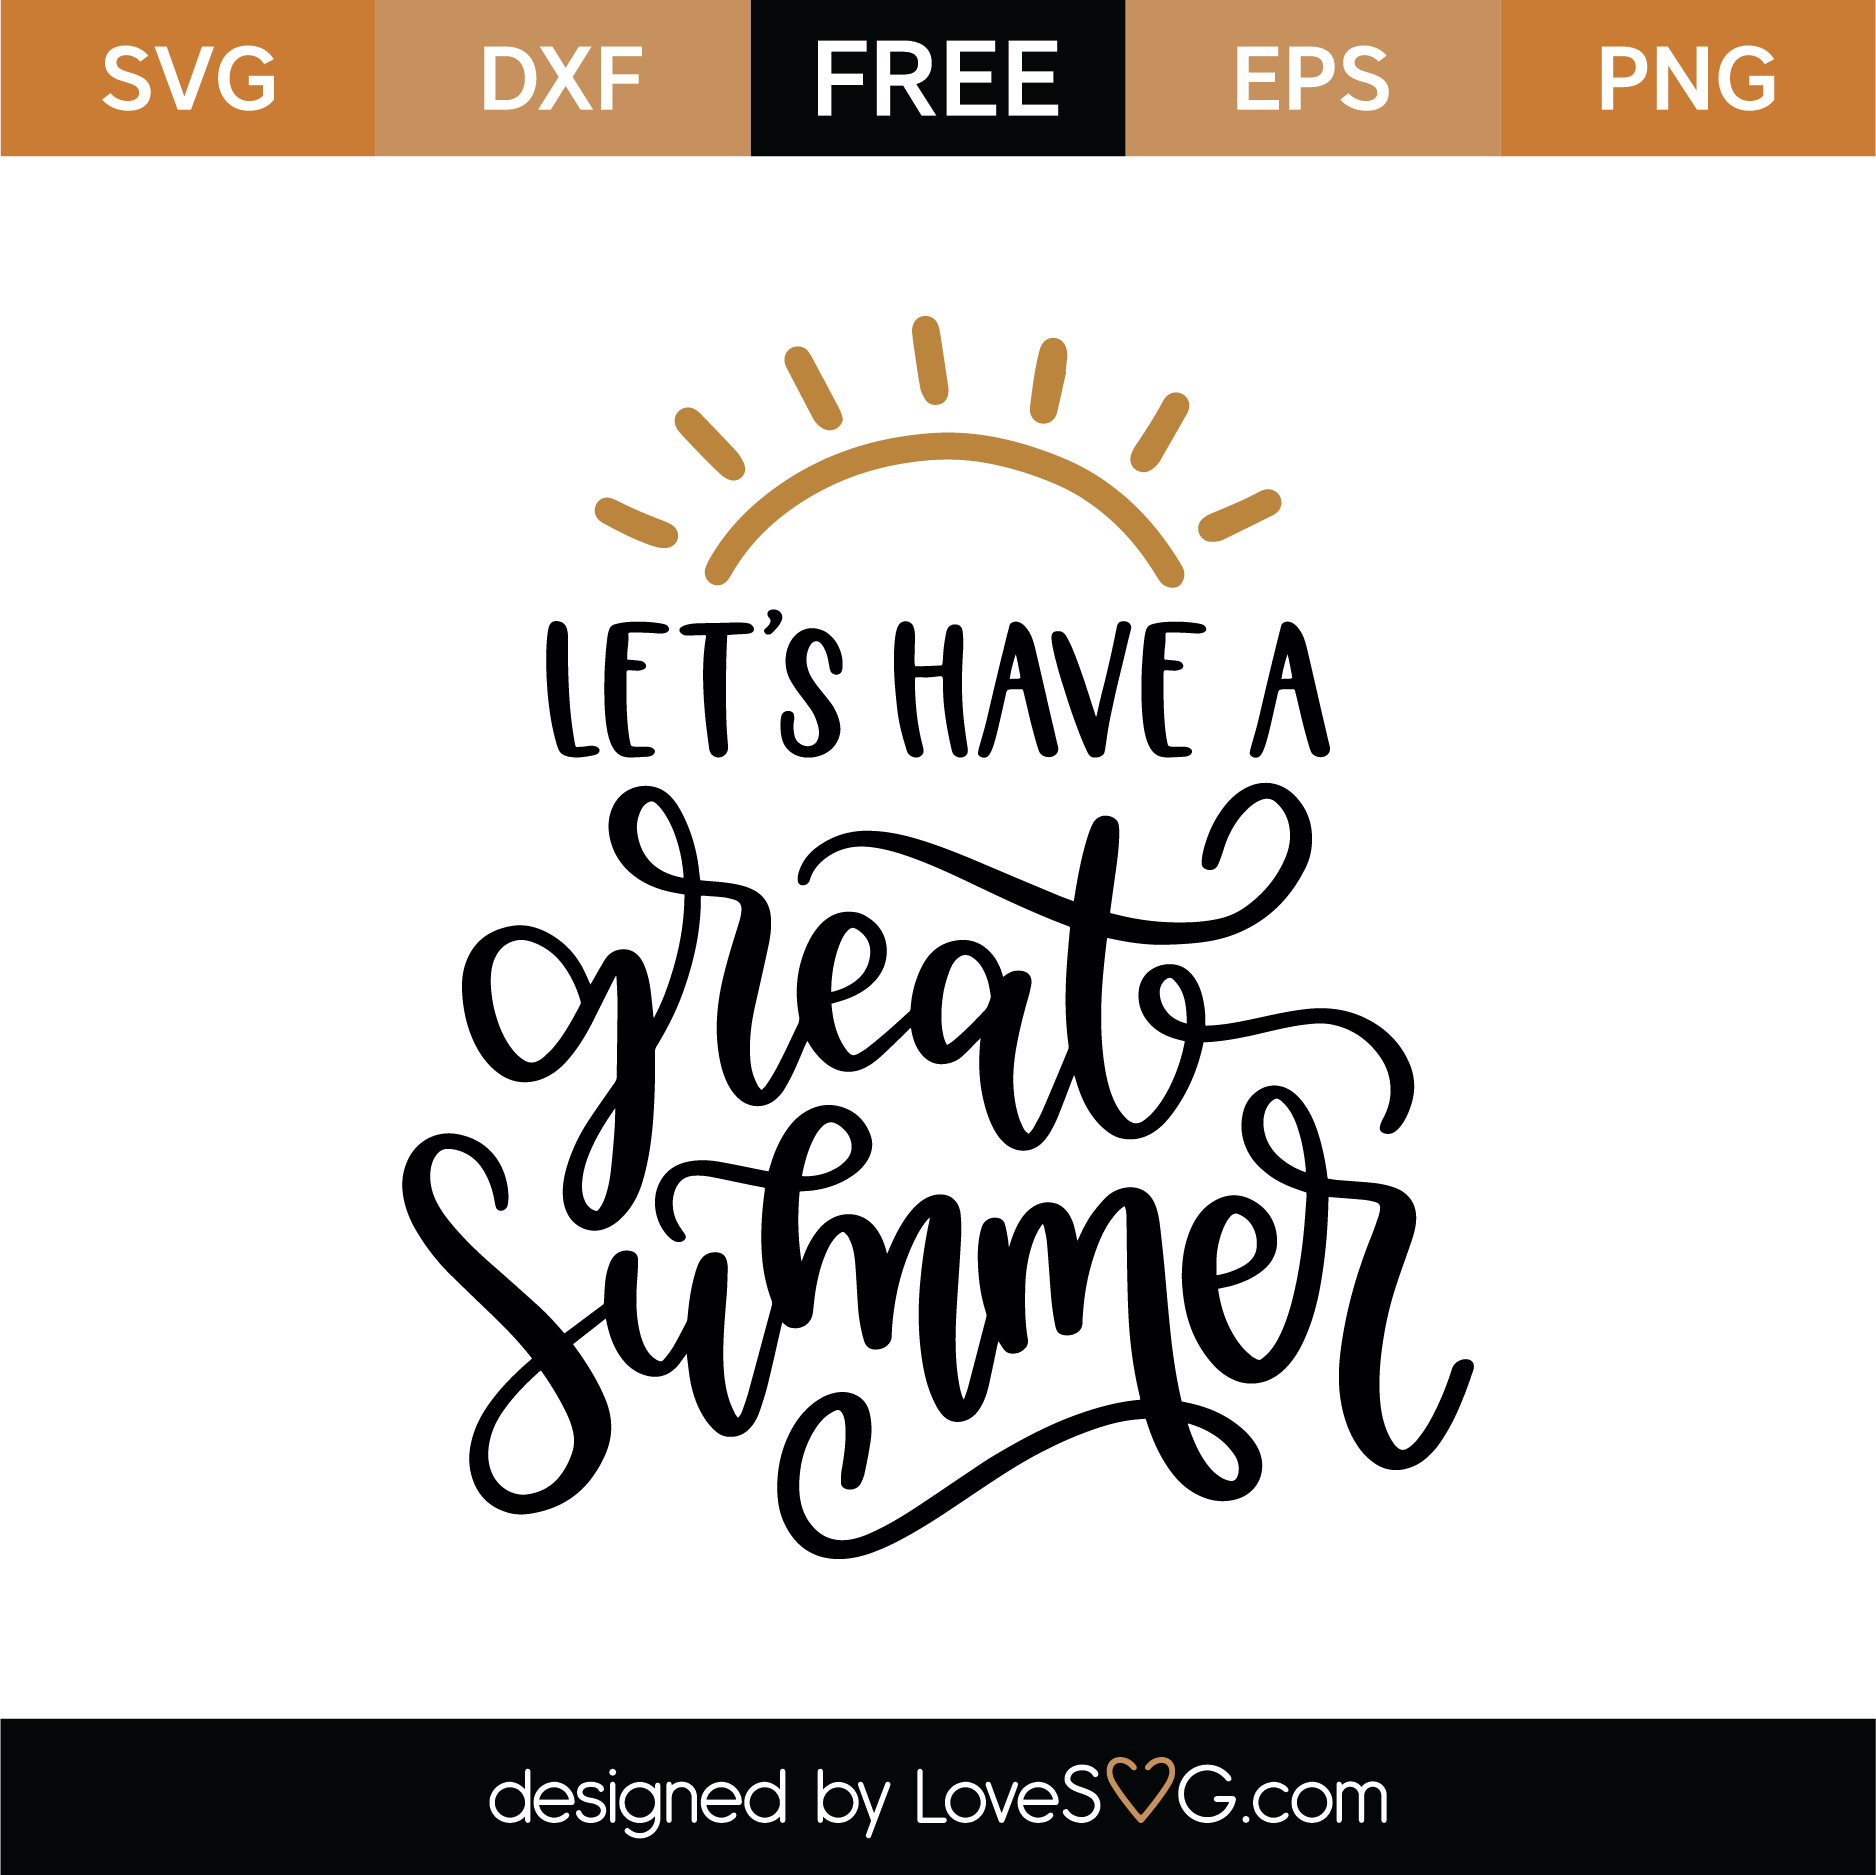 Free Let's Have A Great Summer SVG Cut File | Lovesvg.com